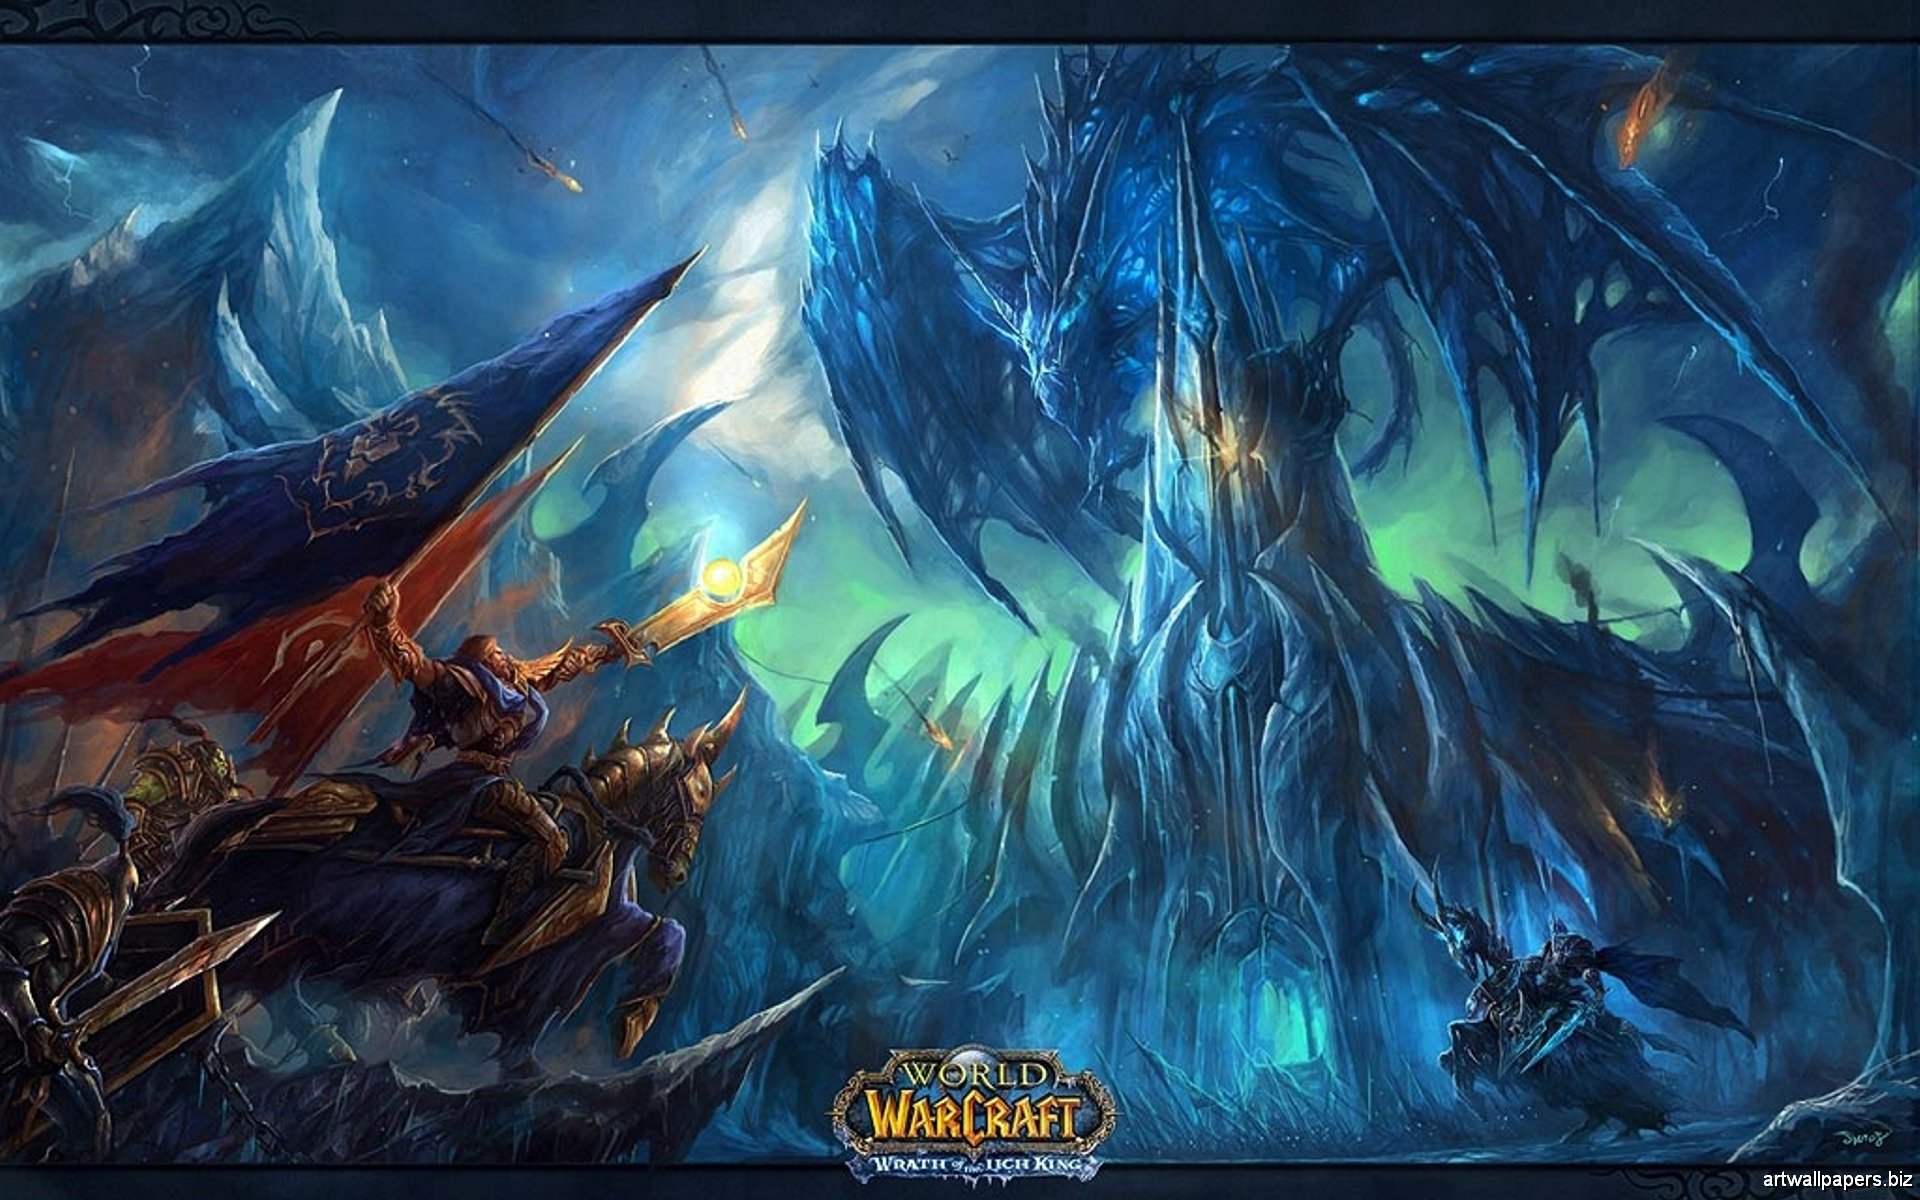 World of Warcraft Wallpapers World of Warcraft CG Art Wallpapers